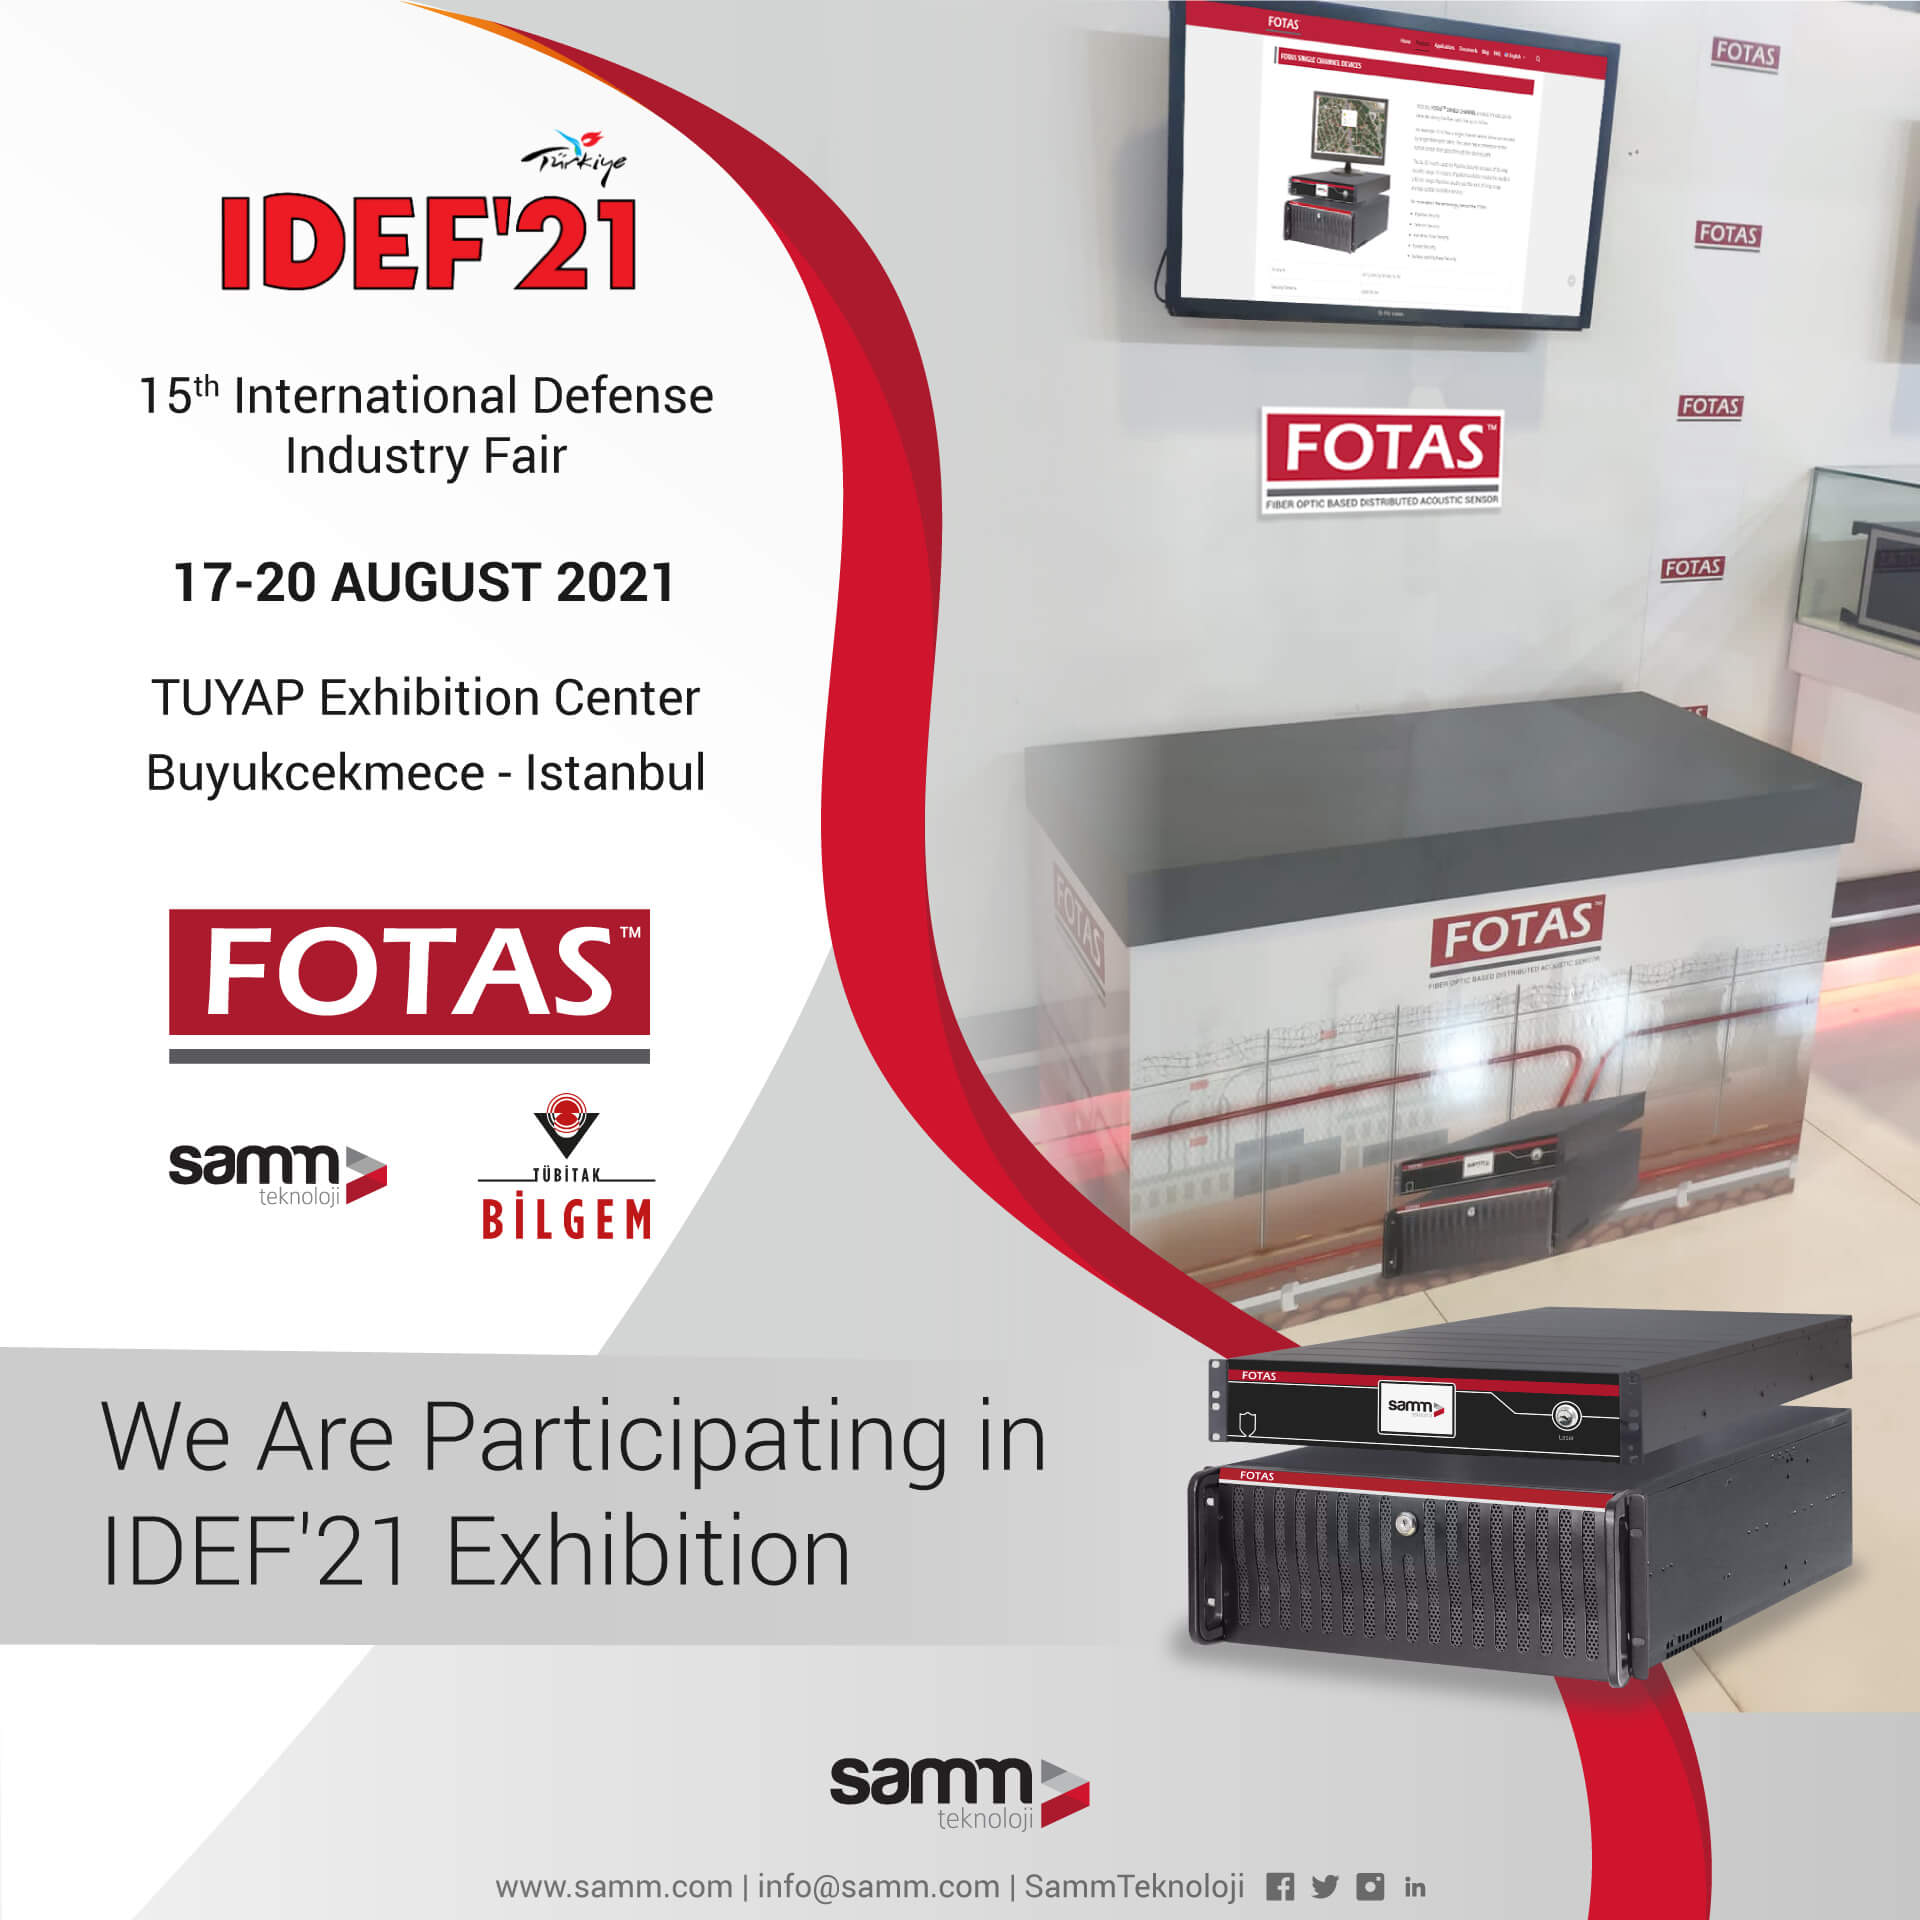 Samm Teknoloji is Participating in IDEF'21 Exhibition